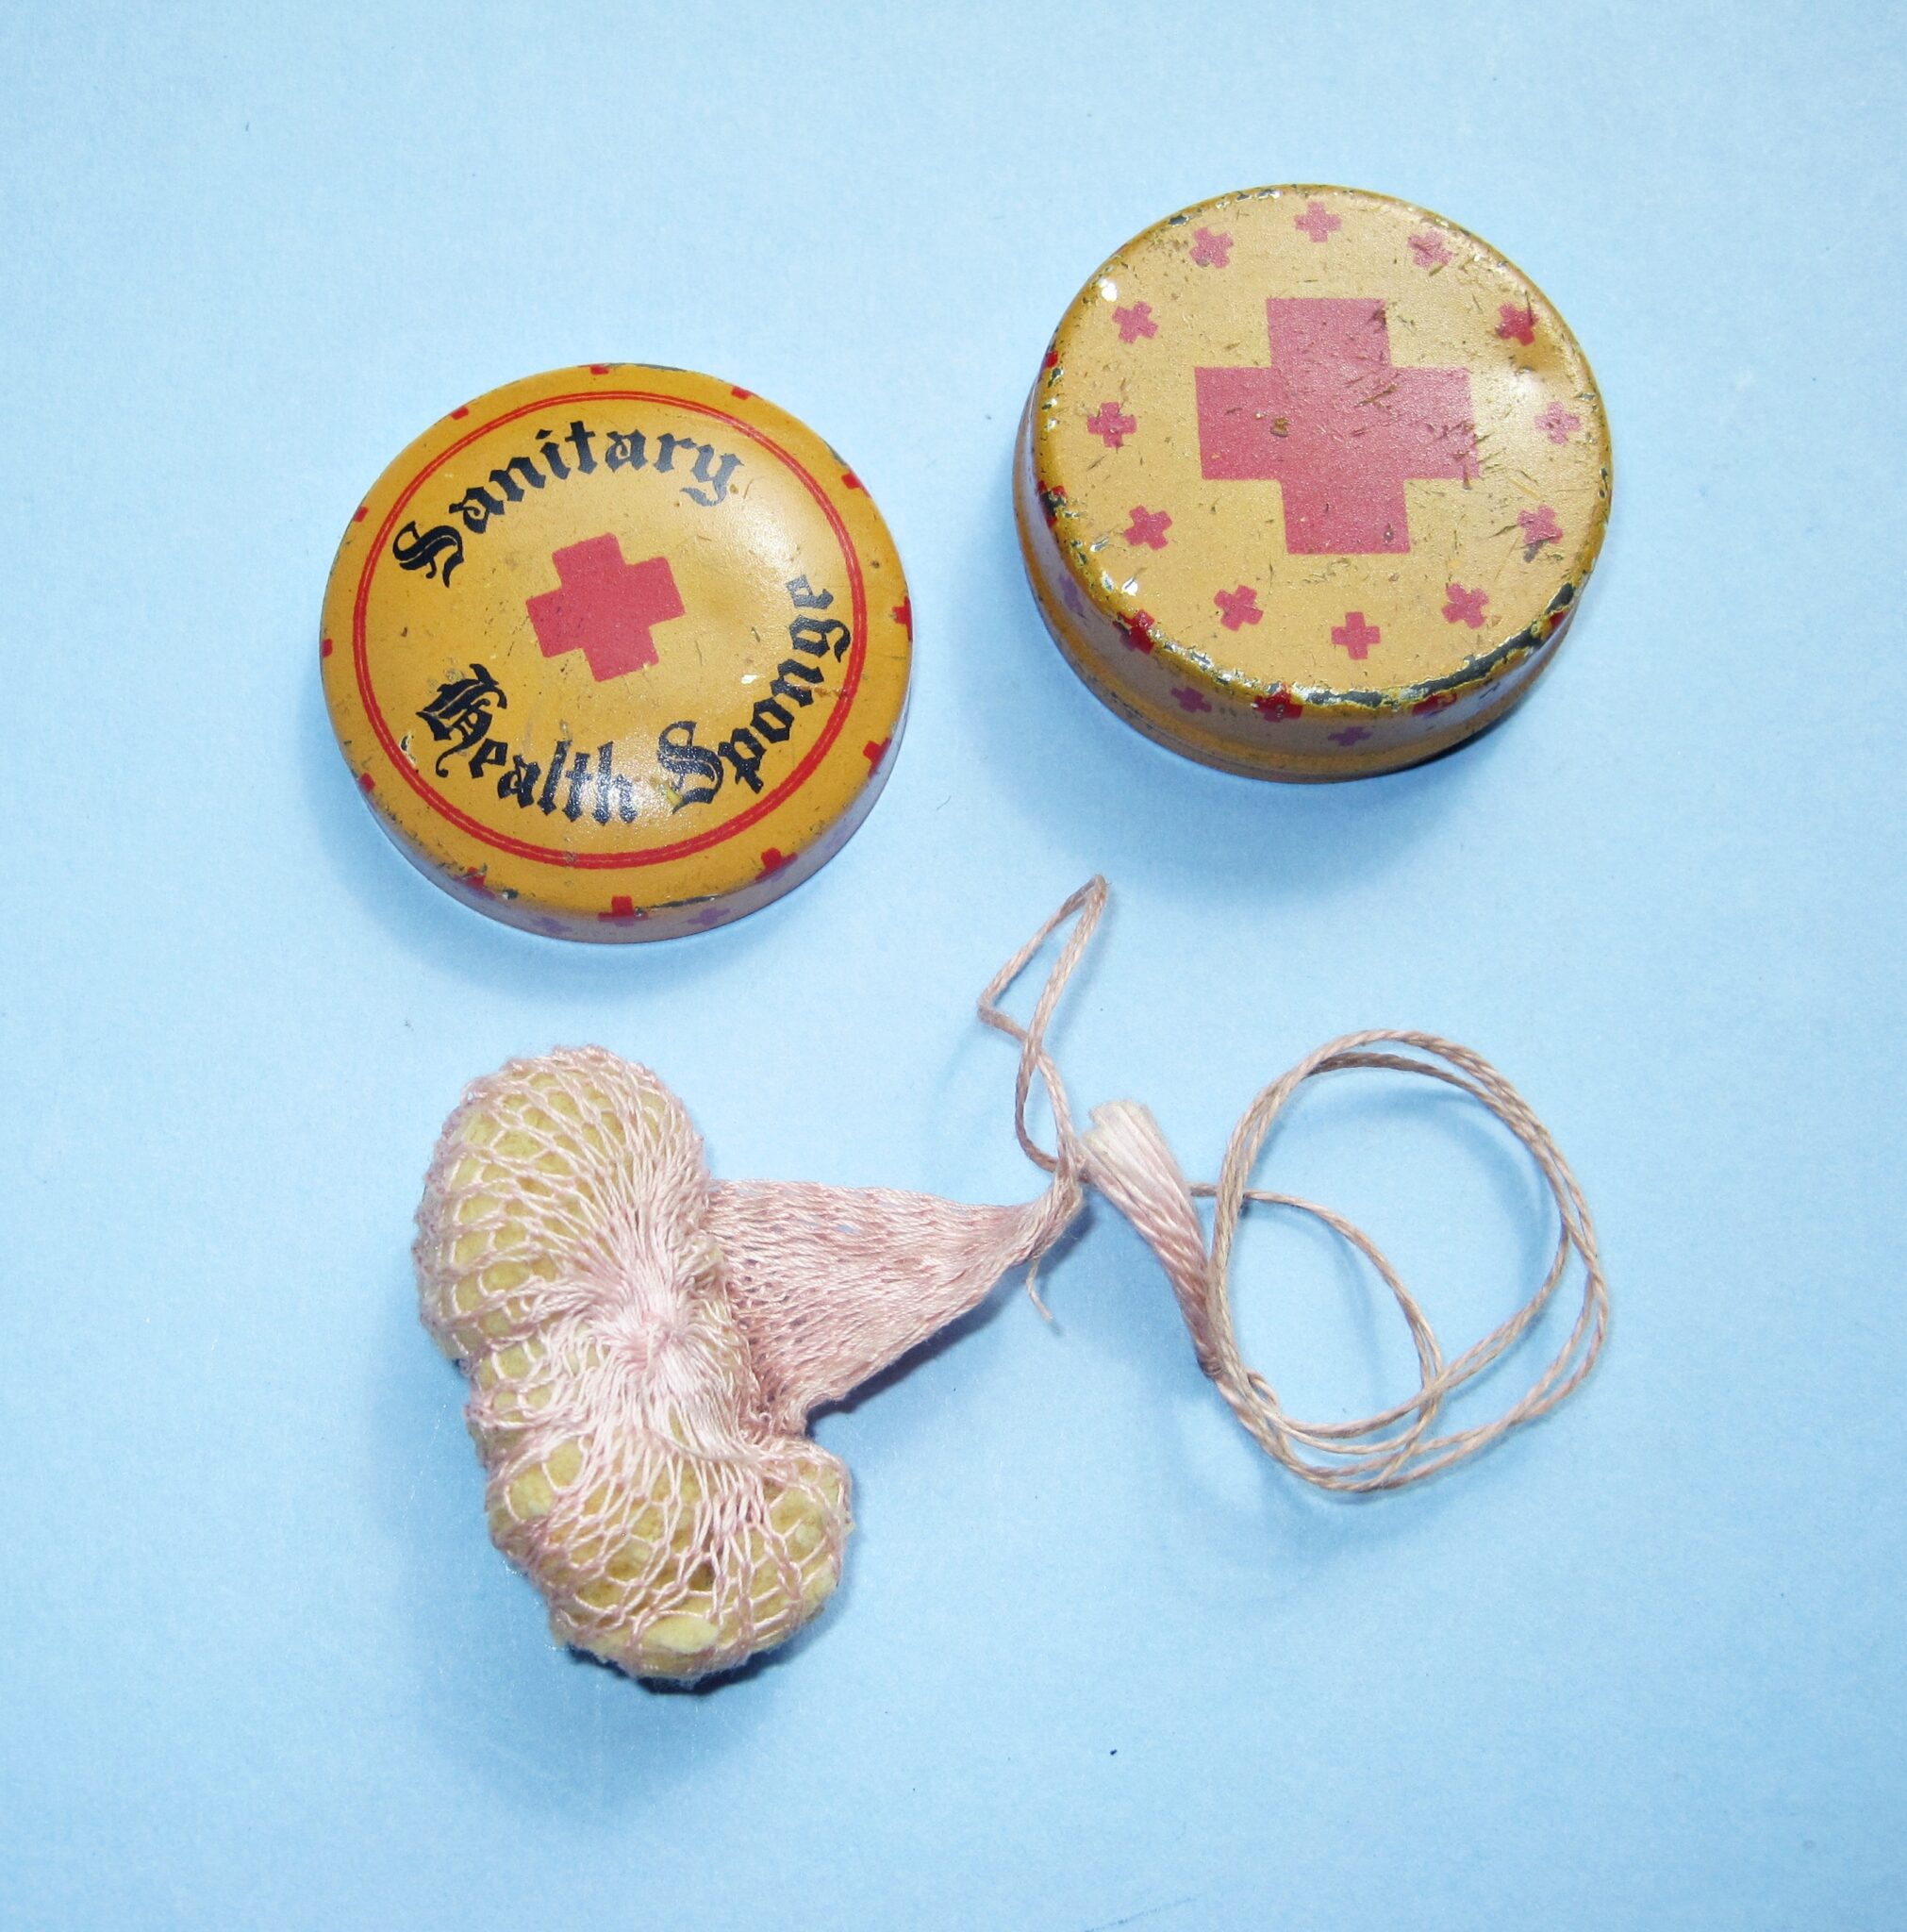 A c1920s contraceptive sponge in its orginal tin